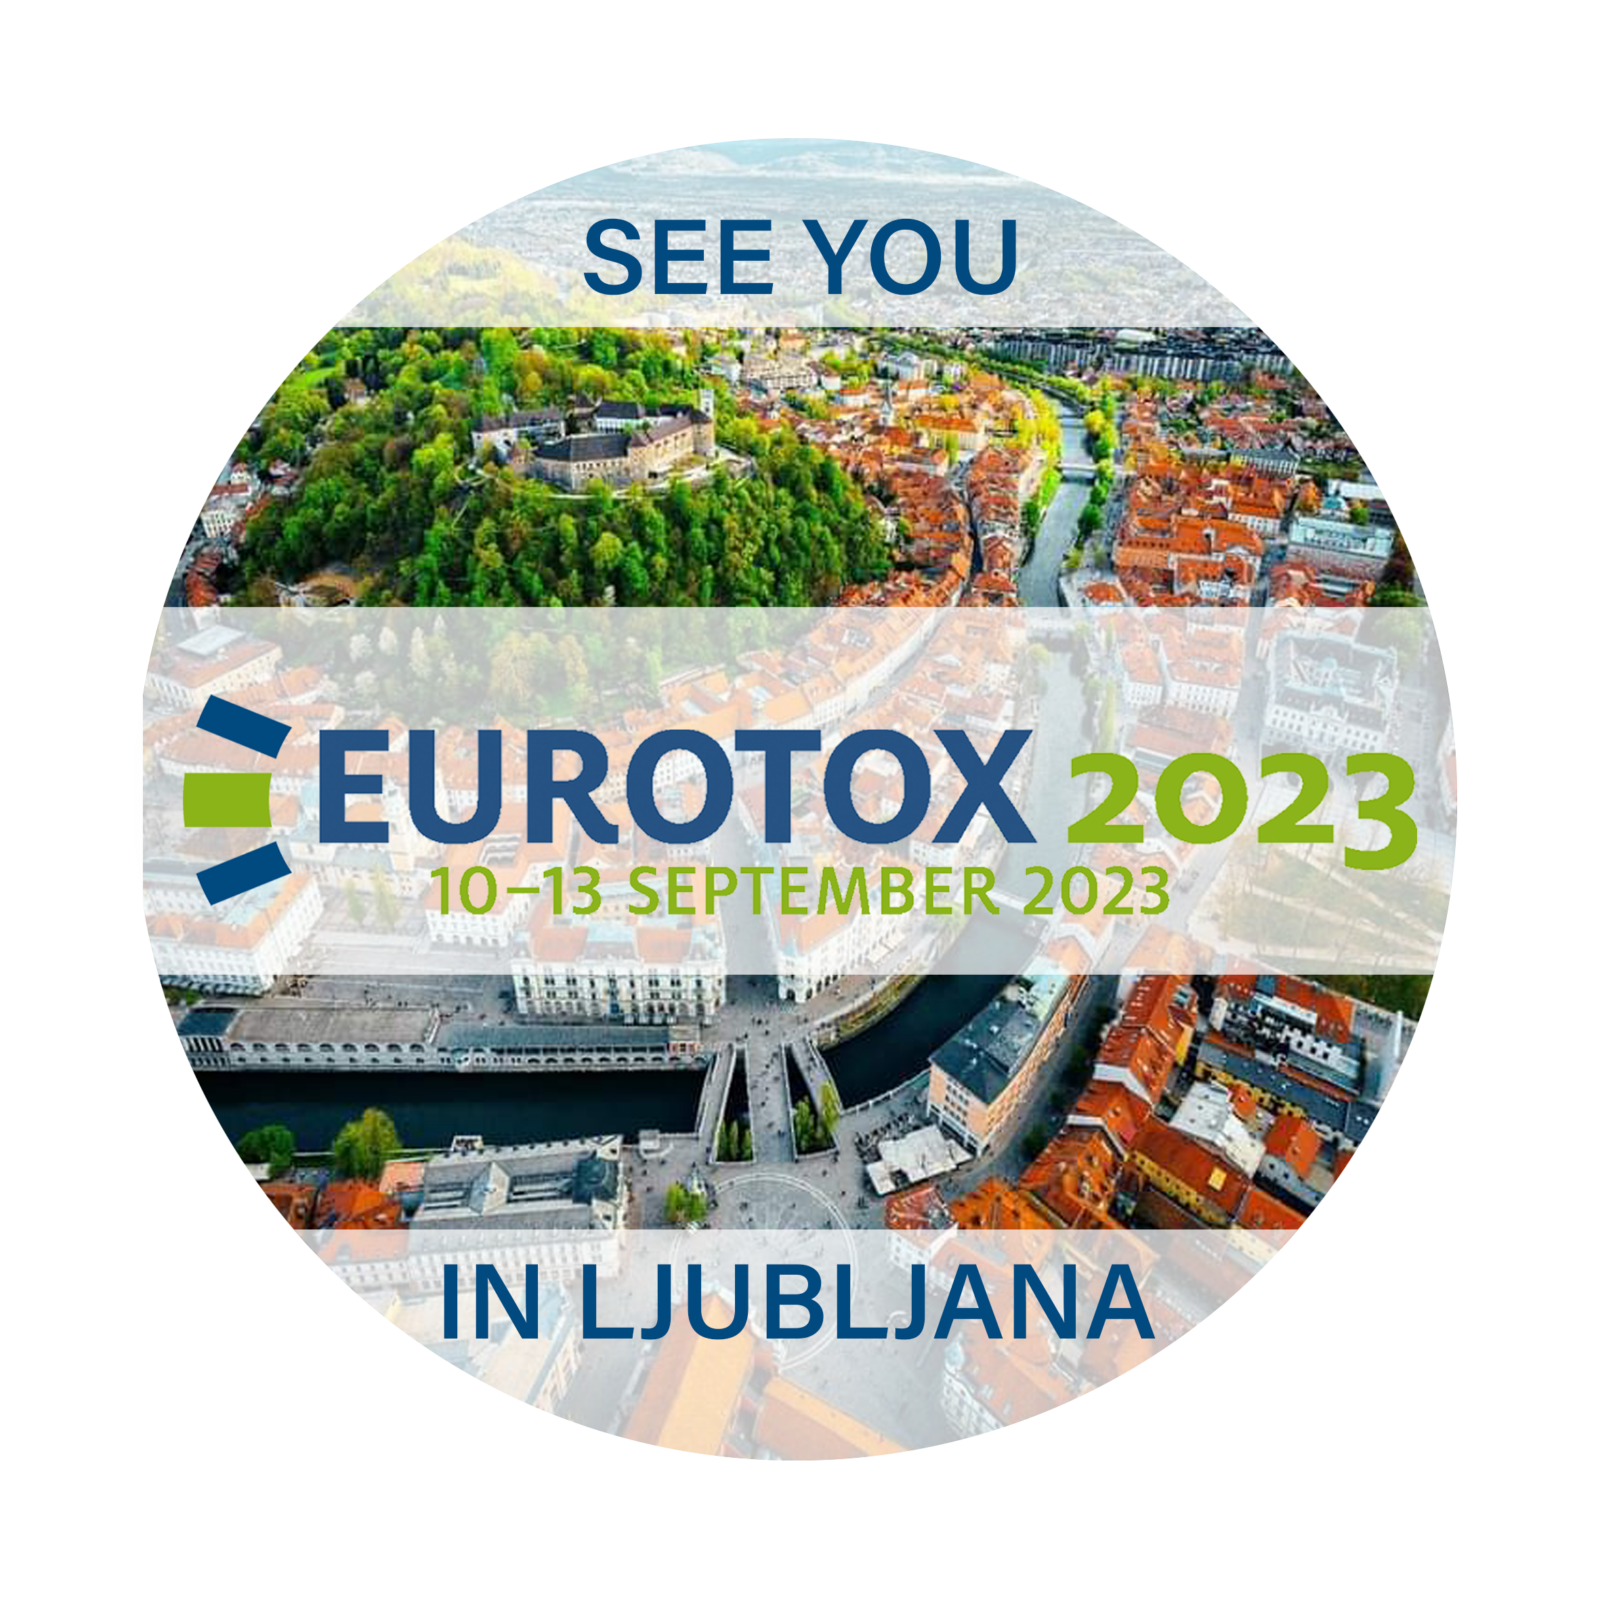 Join MatTek at EUROTOX 2023